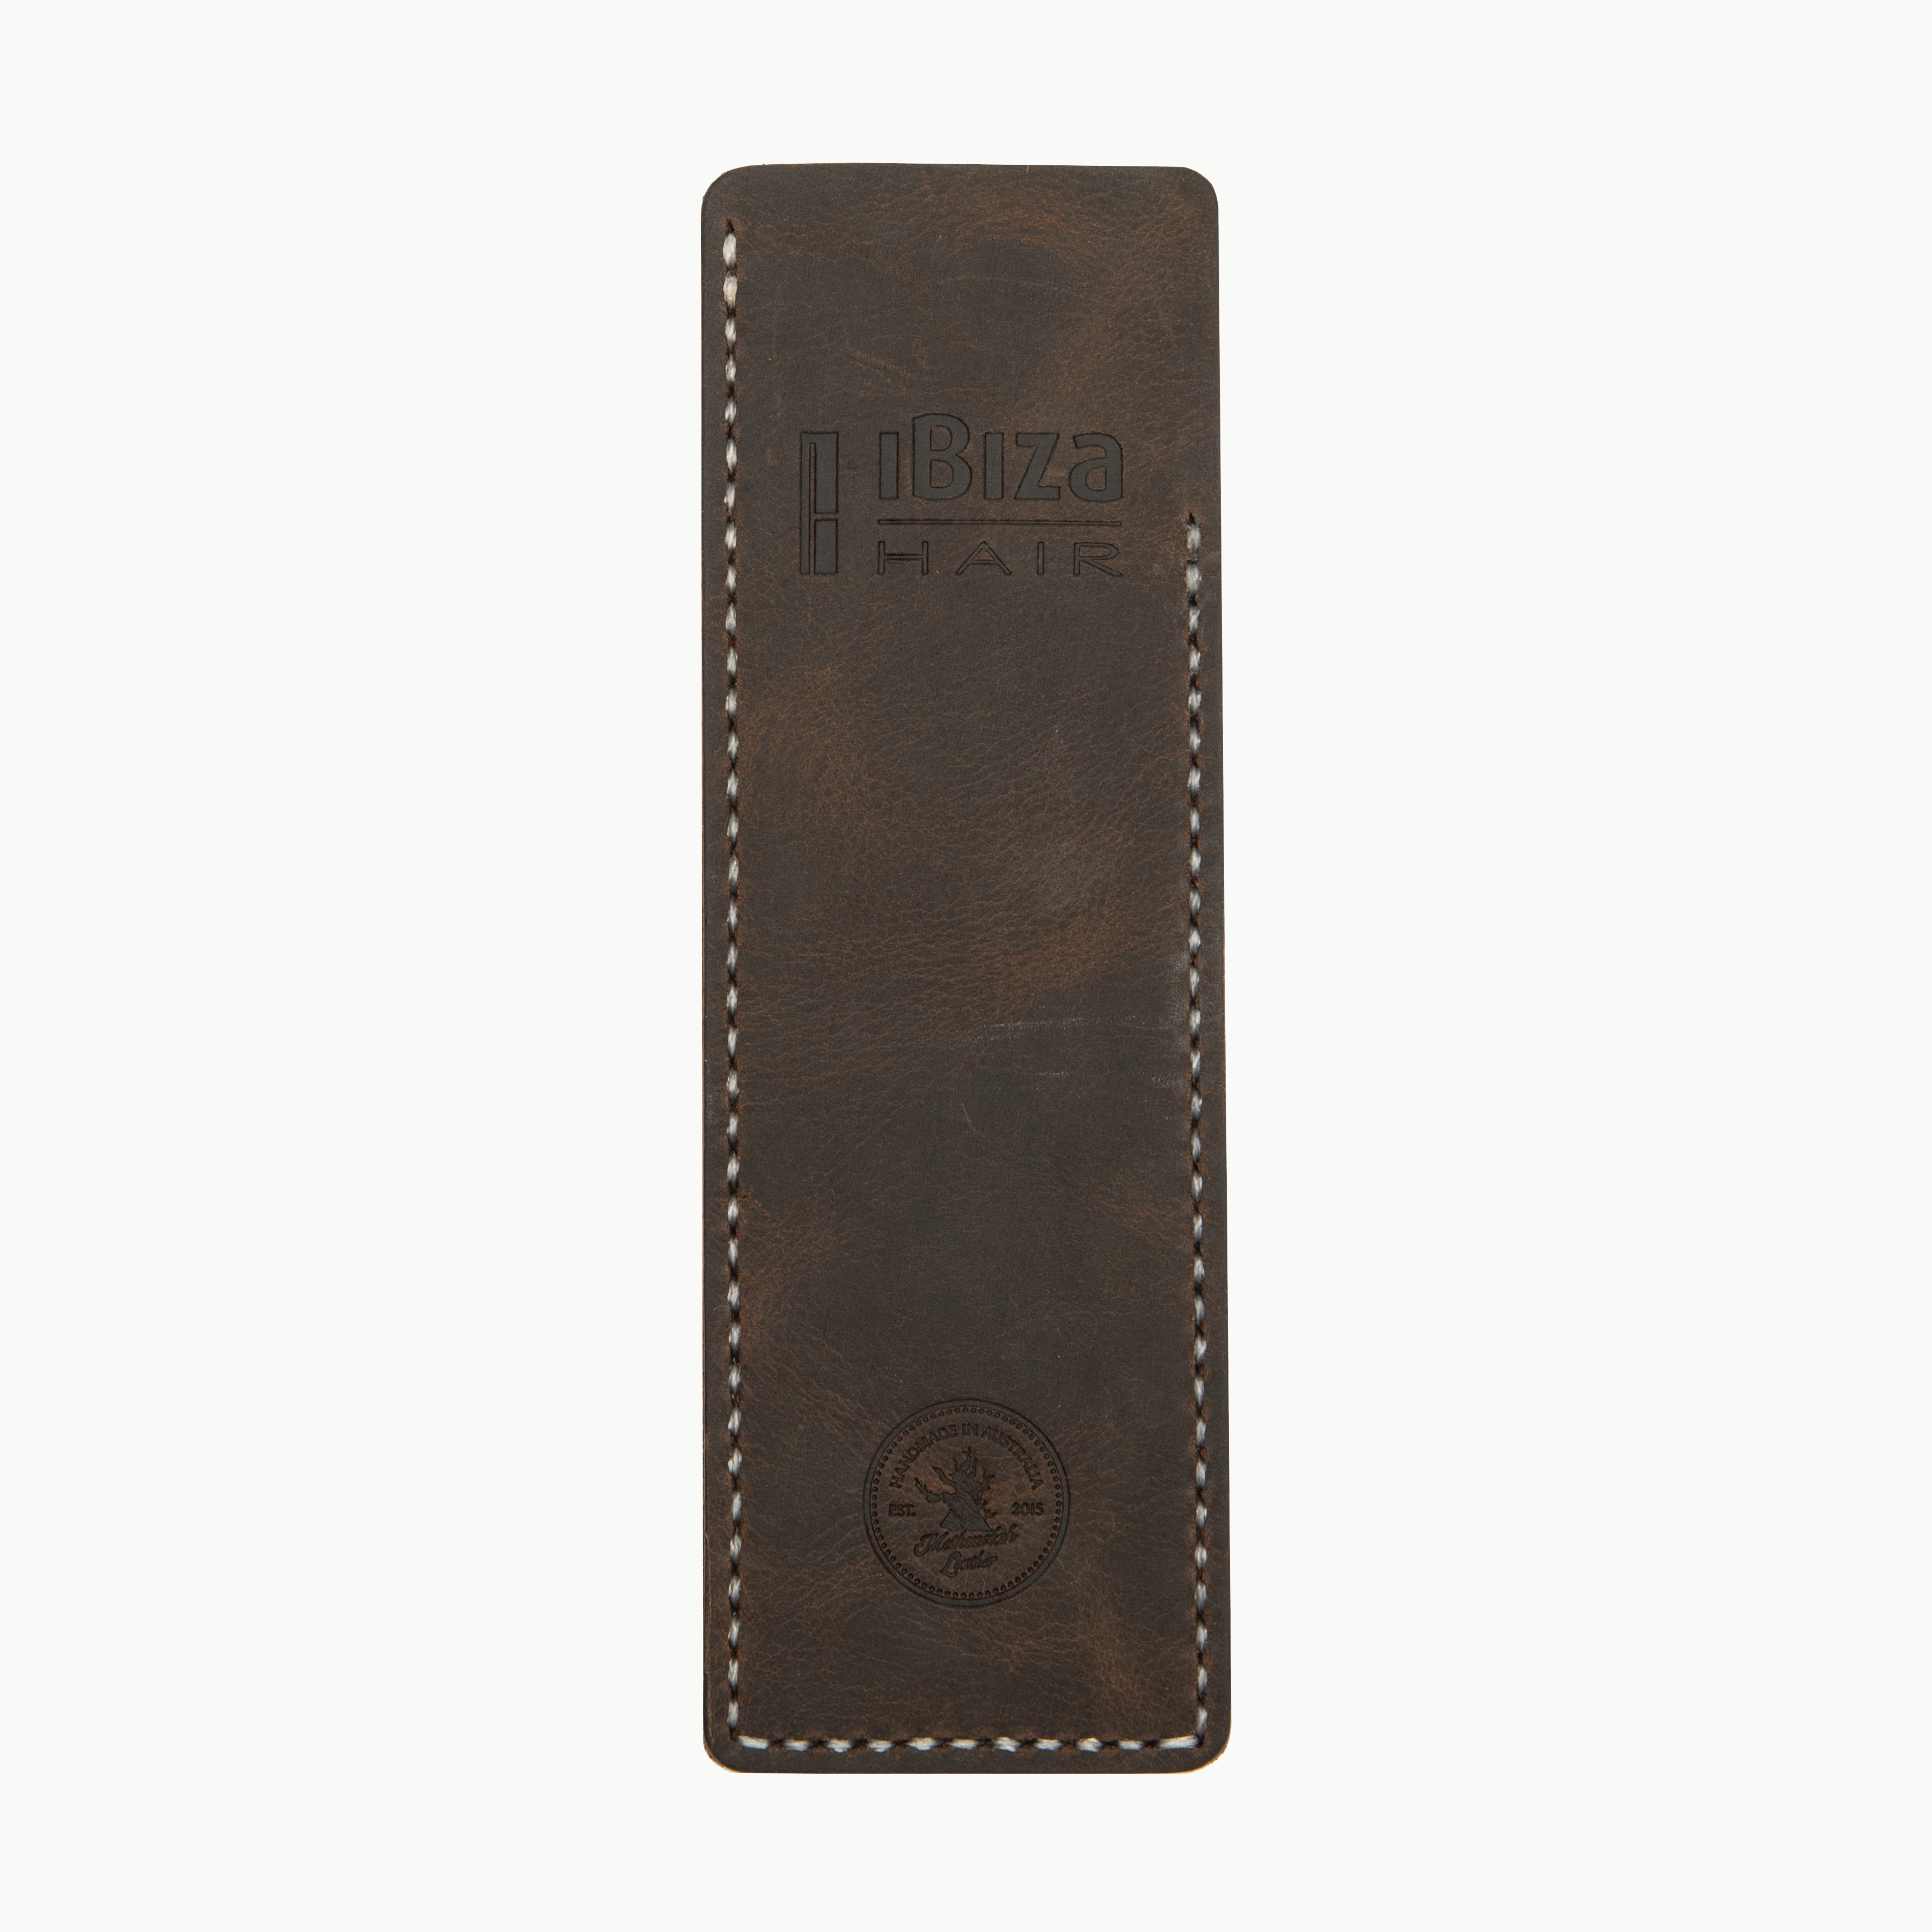 Comb Sleeve dark brown leather